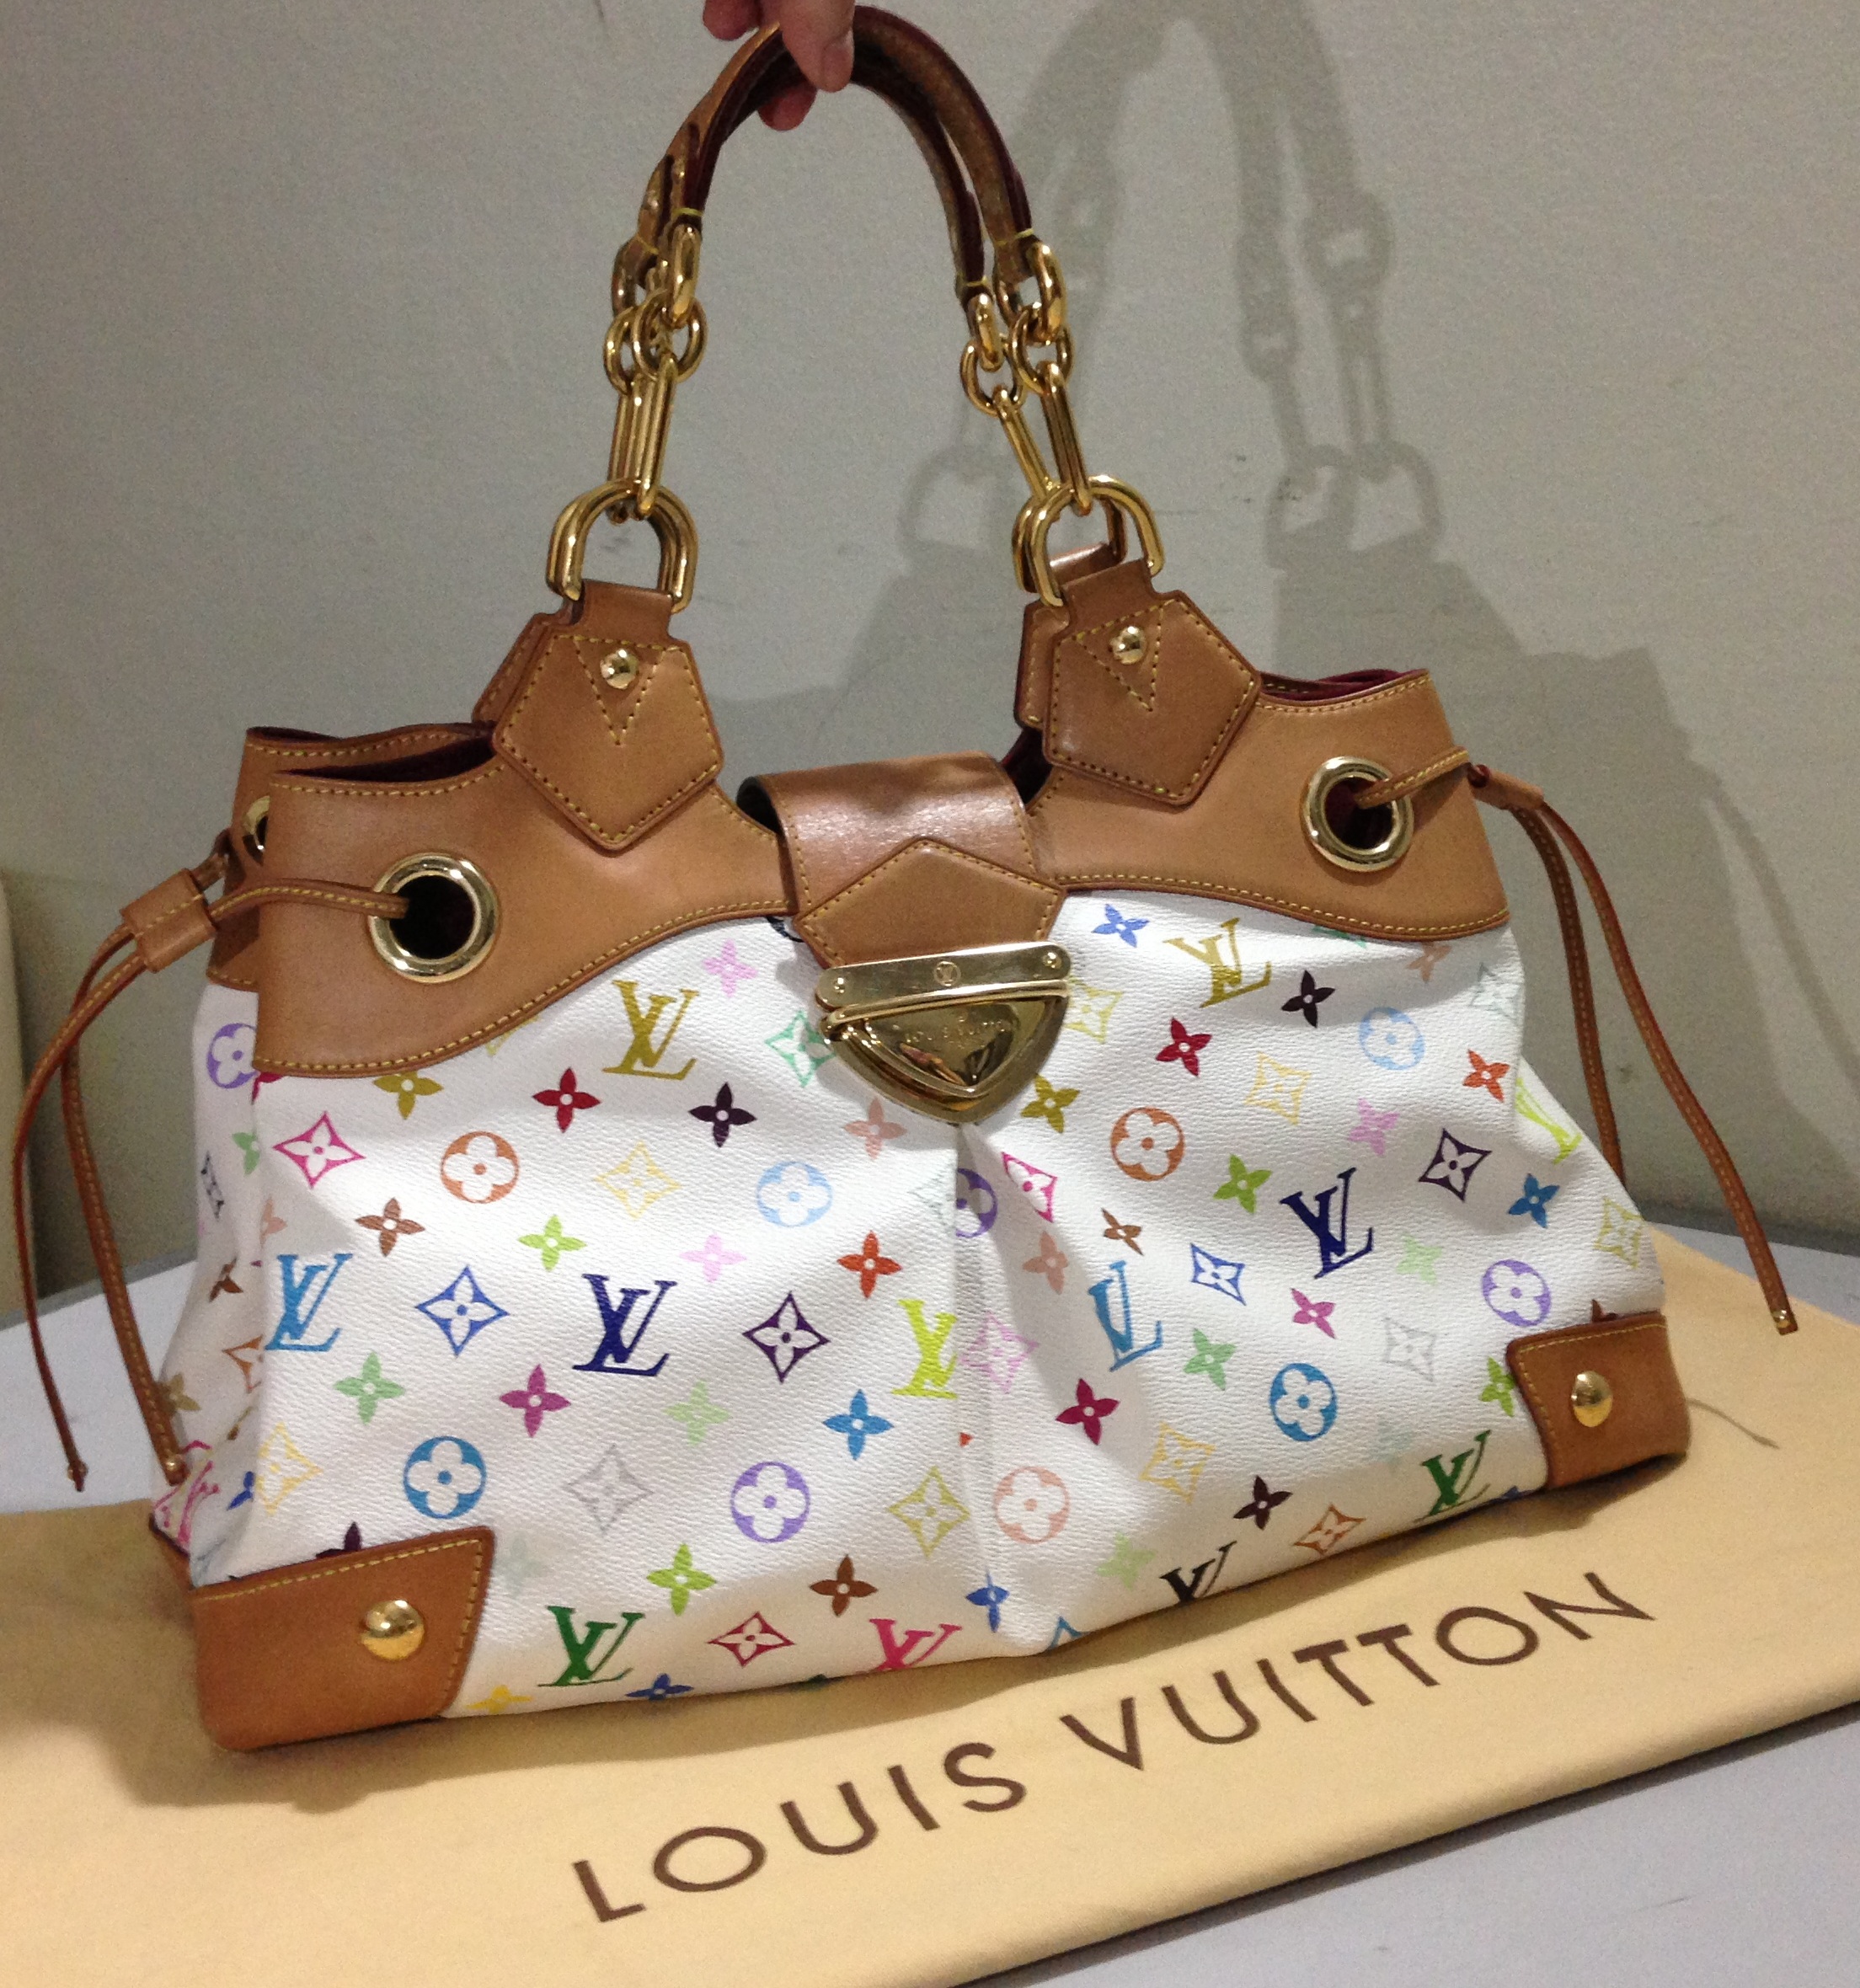 SOLD - Louis Vuitton Shoulder Tote Bag Ursula White Multi Color M40123 @$1200